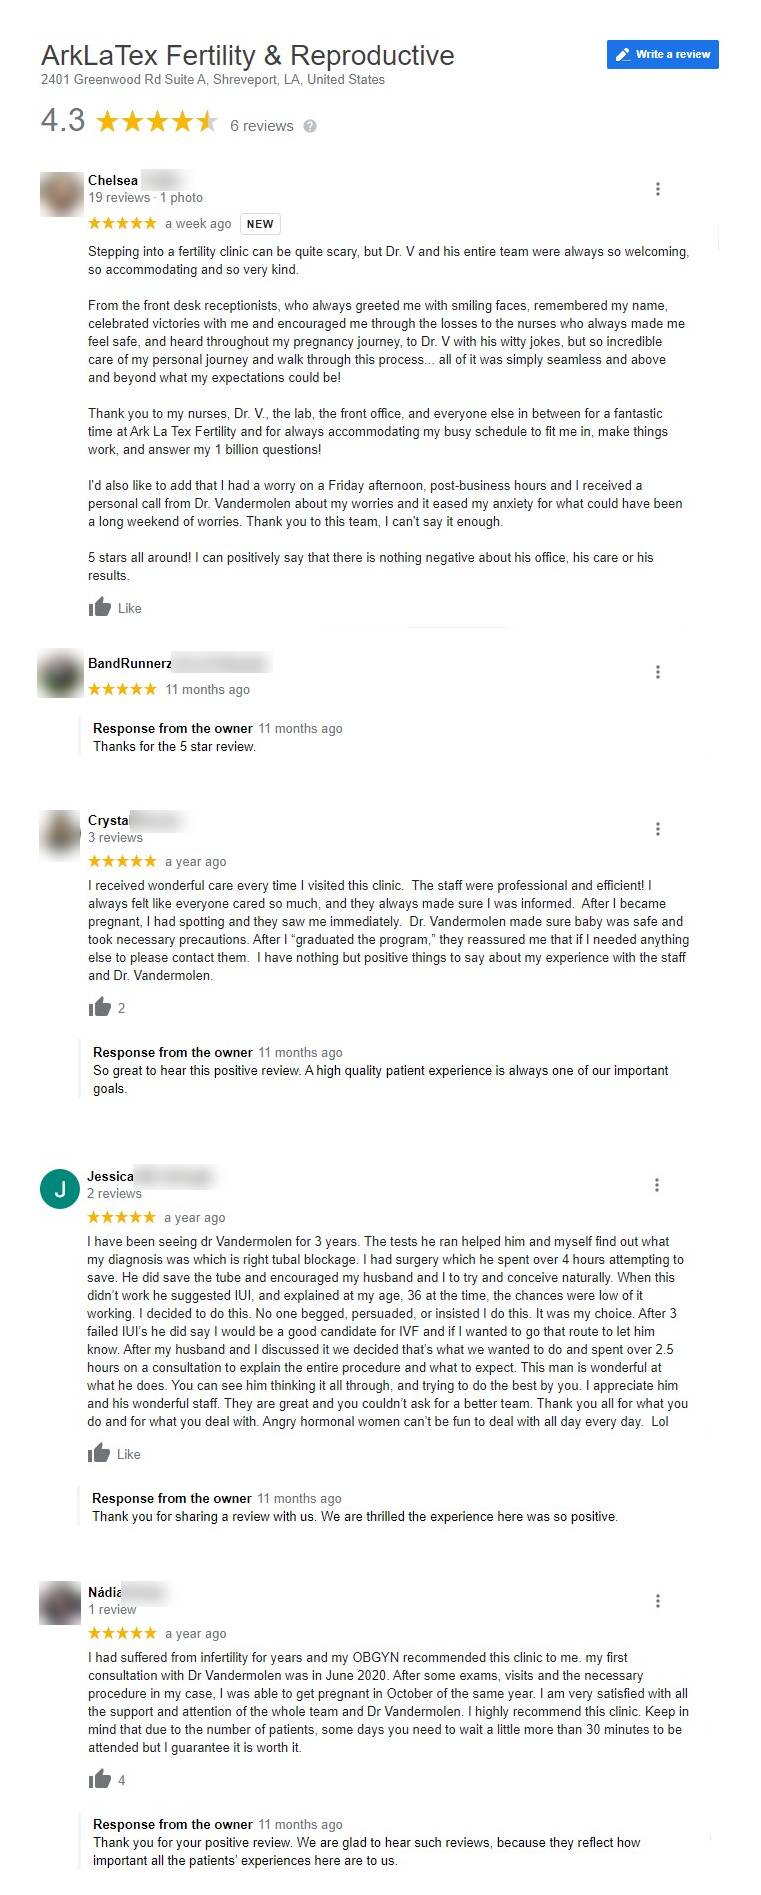 Reviews on Arklatex